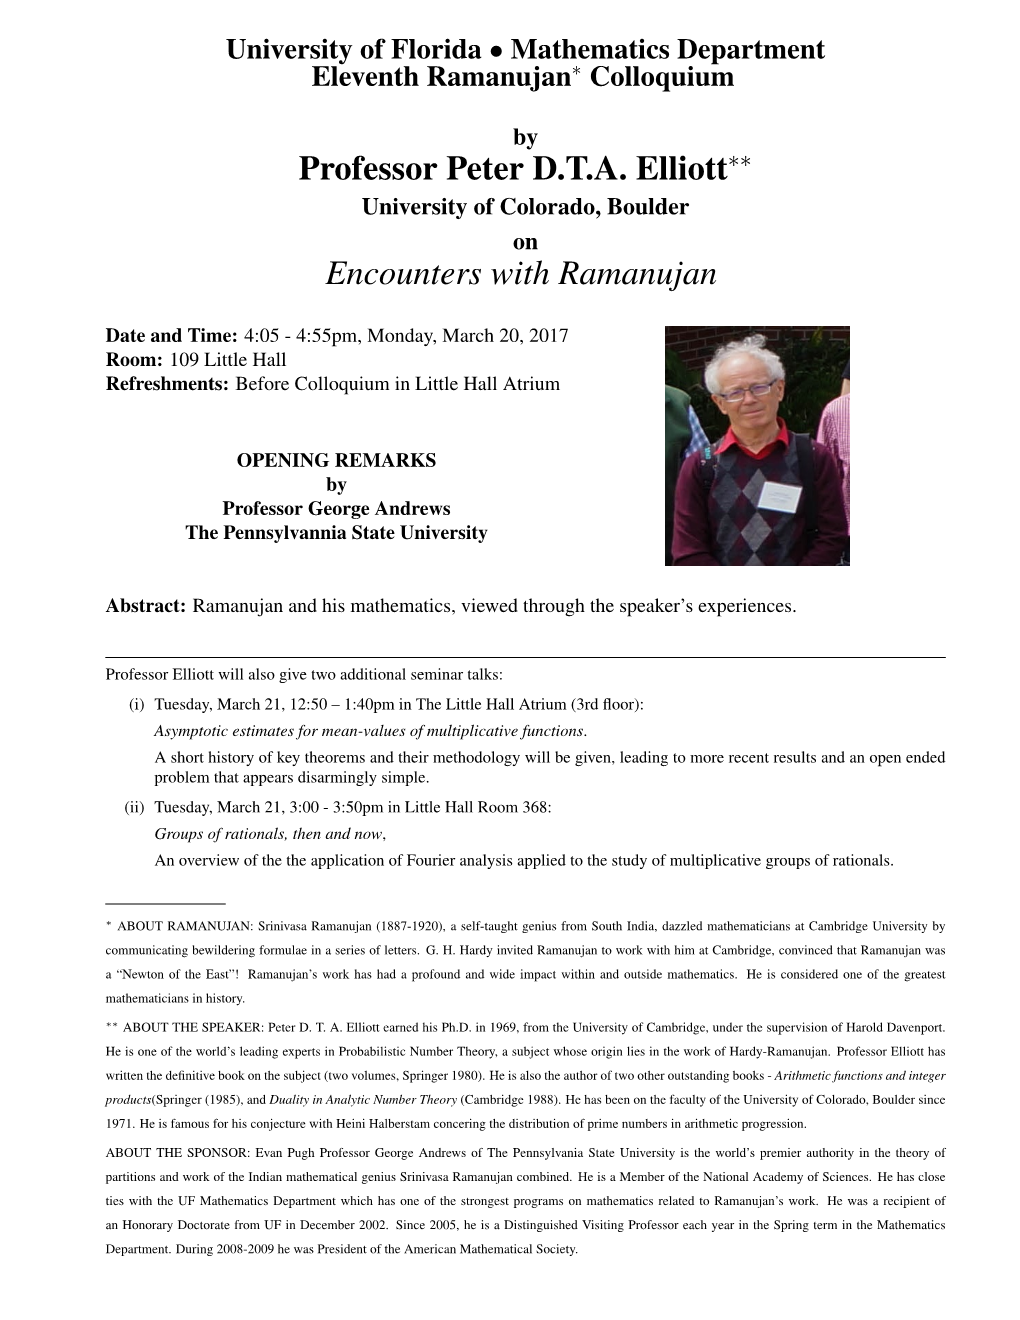 Professor Peter D.T.A. Elliott Encounters with Ramanujan